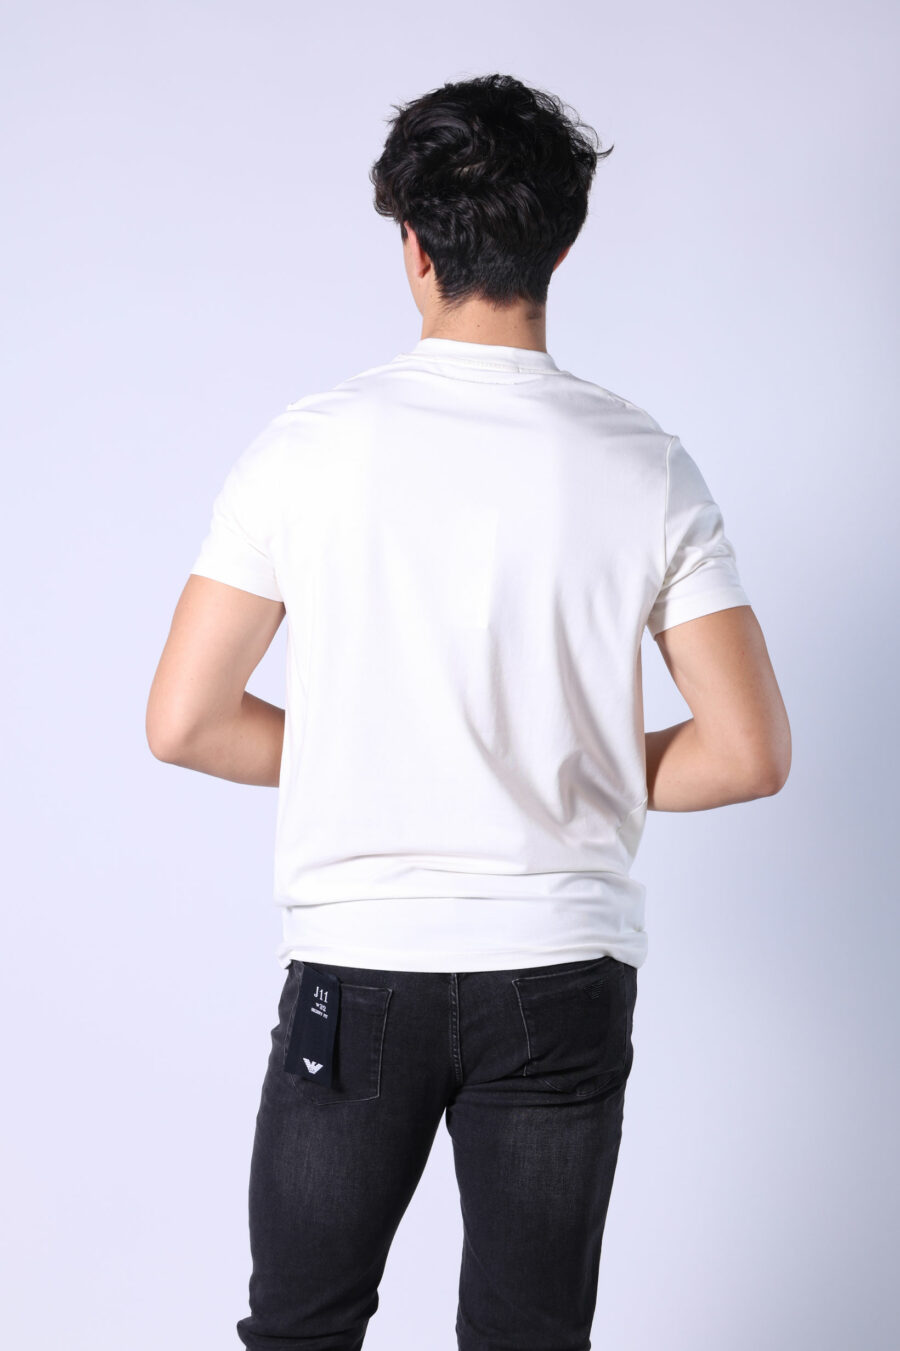 Camiseta blanca con maxilogo monocromático "rue st guillaume" - Untitled Catalog 05762